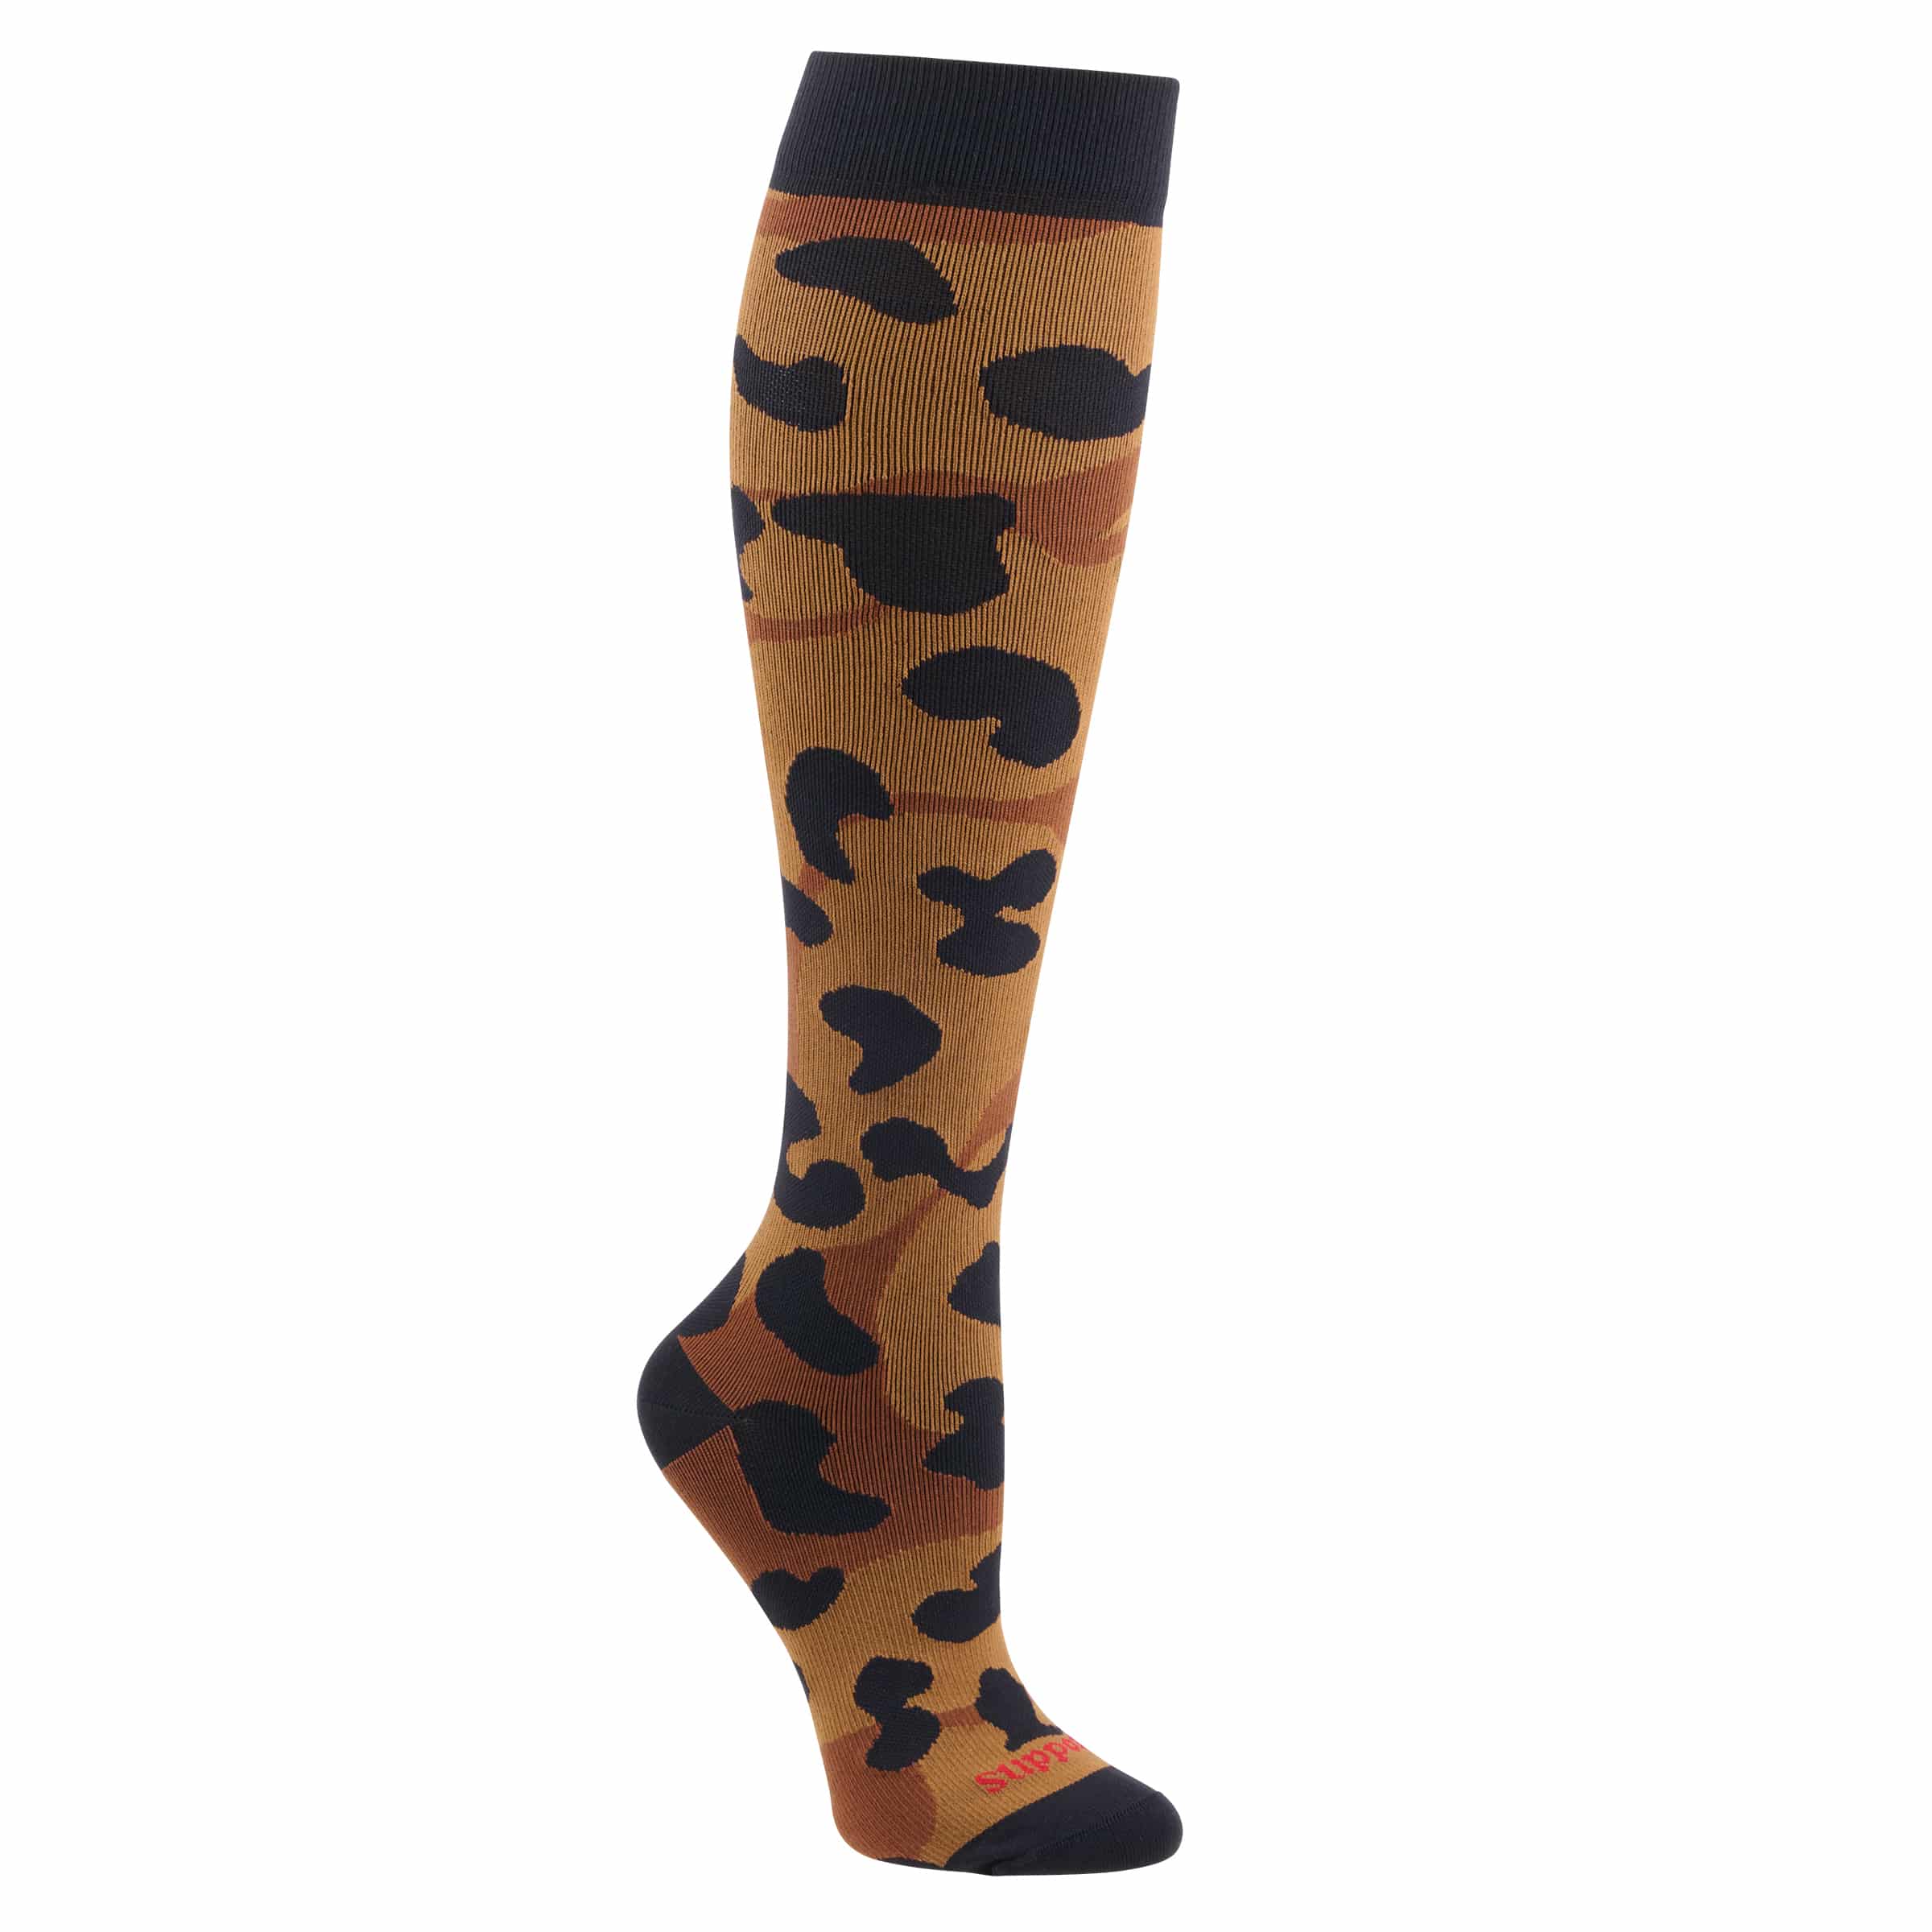 Unisex Leopard Compression Socks